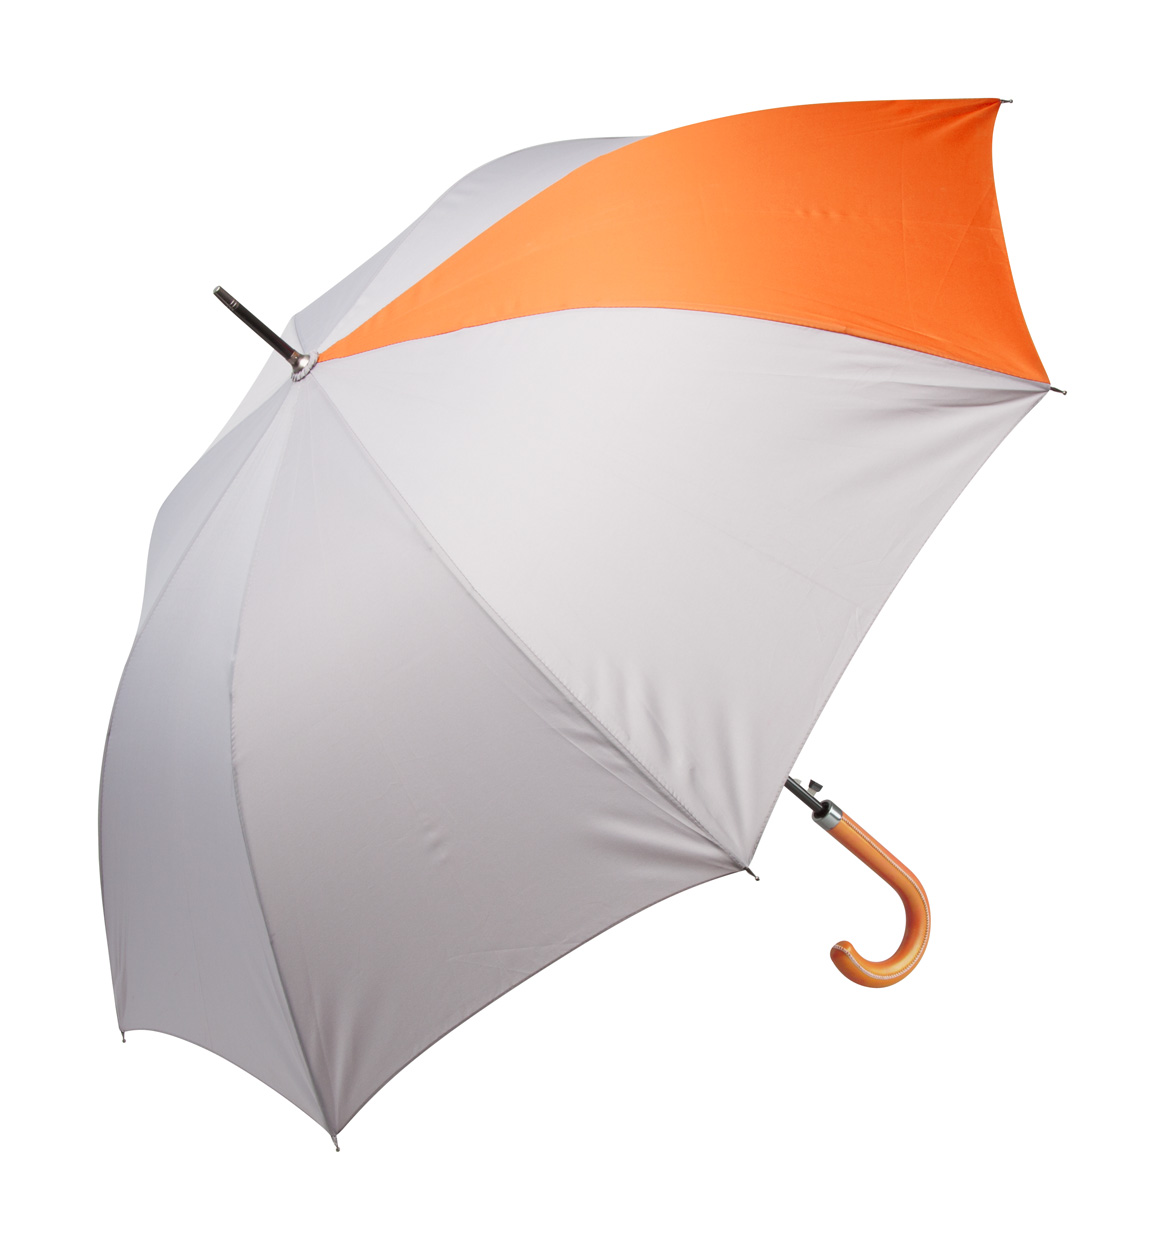 Stratus automatski kišobran otporan na vjetar, narančaste boje s tiskom 